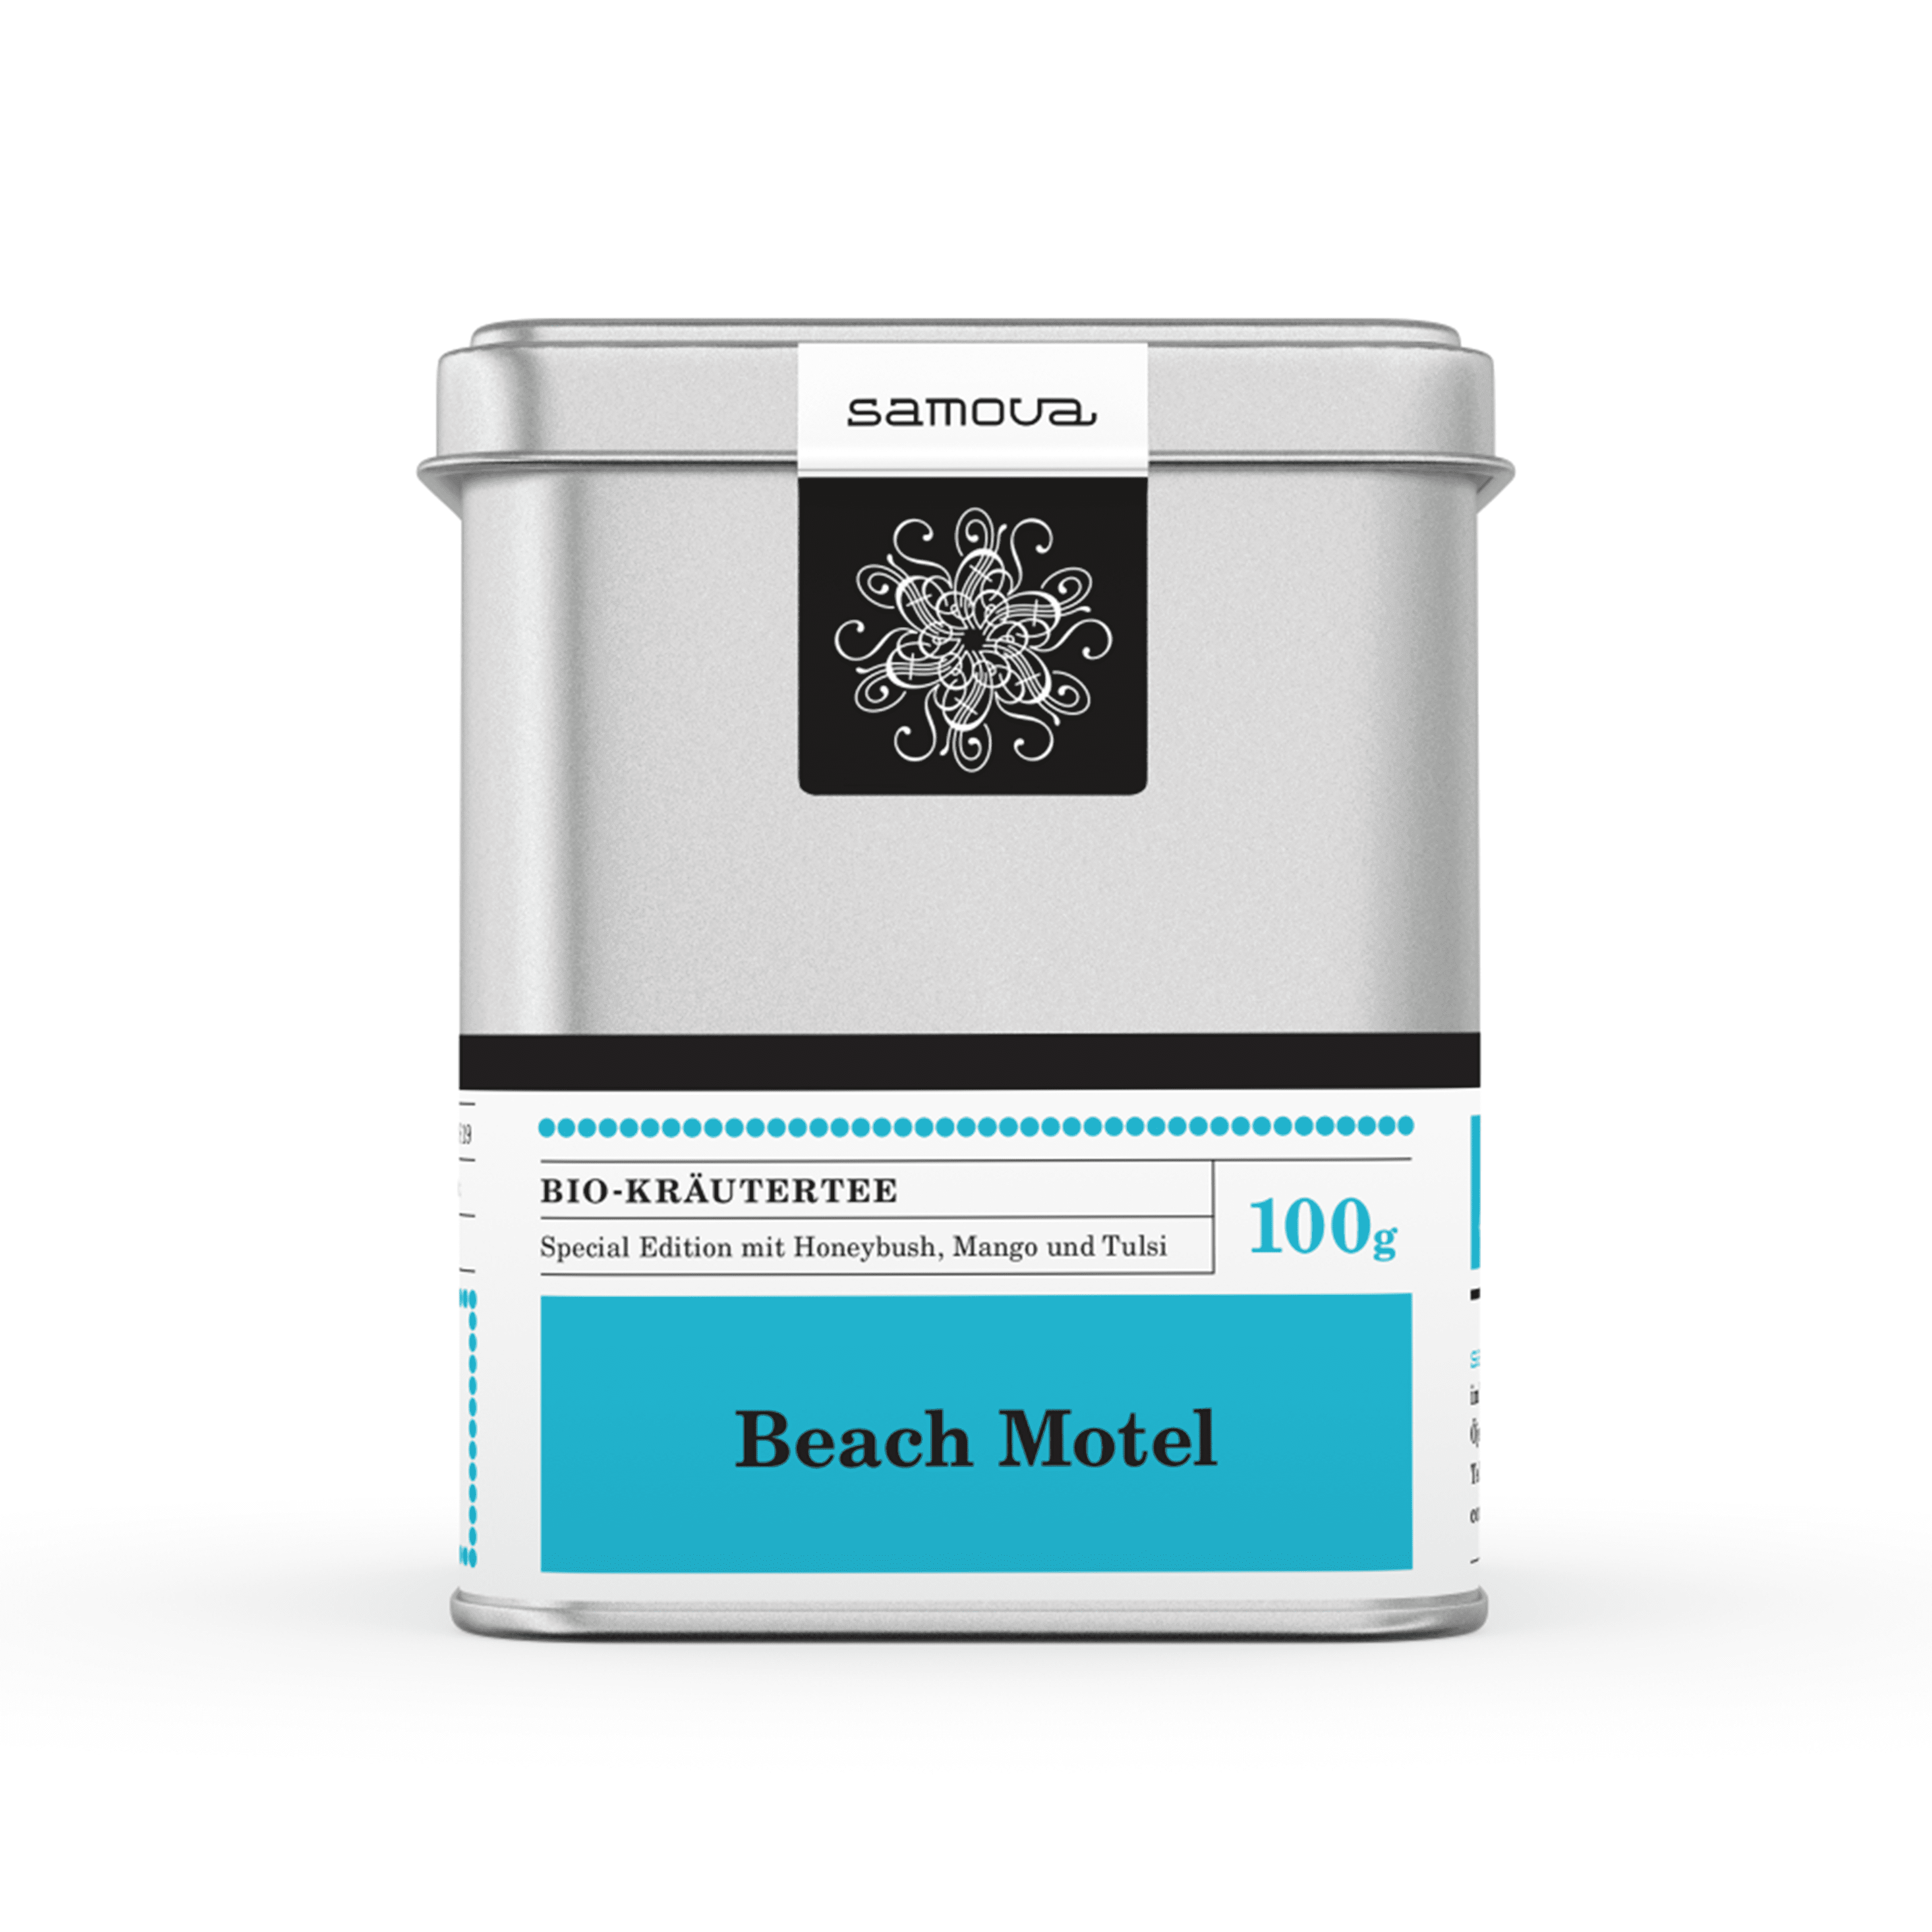 Can of Beach Motel tea